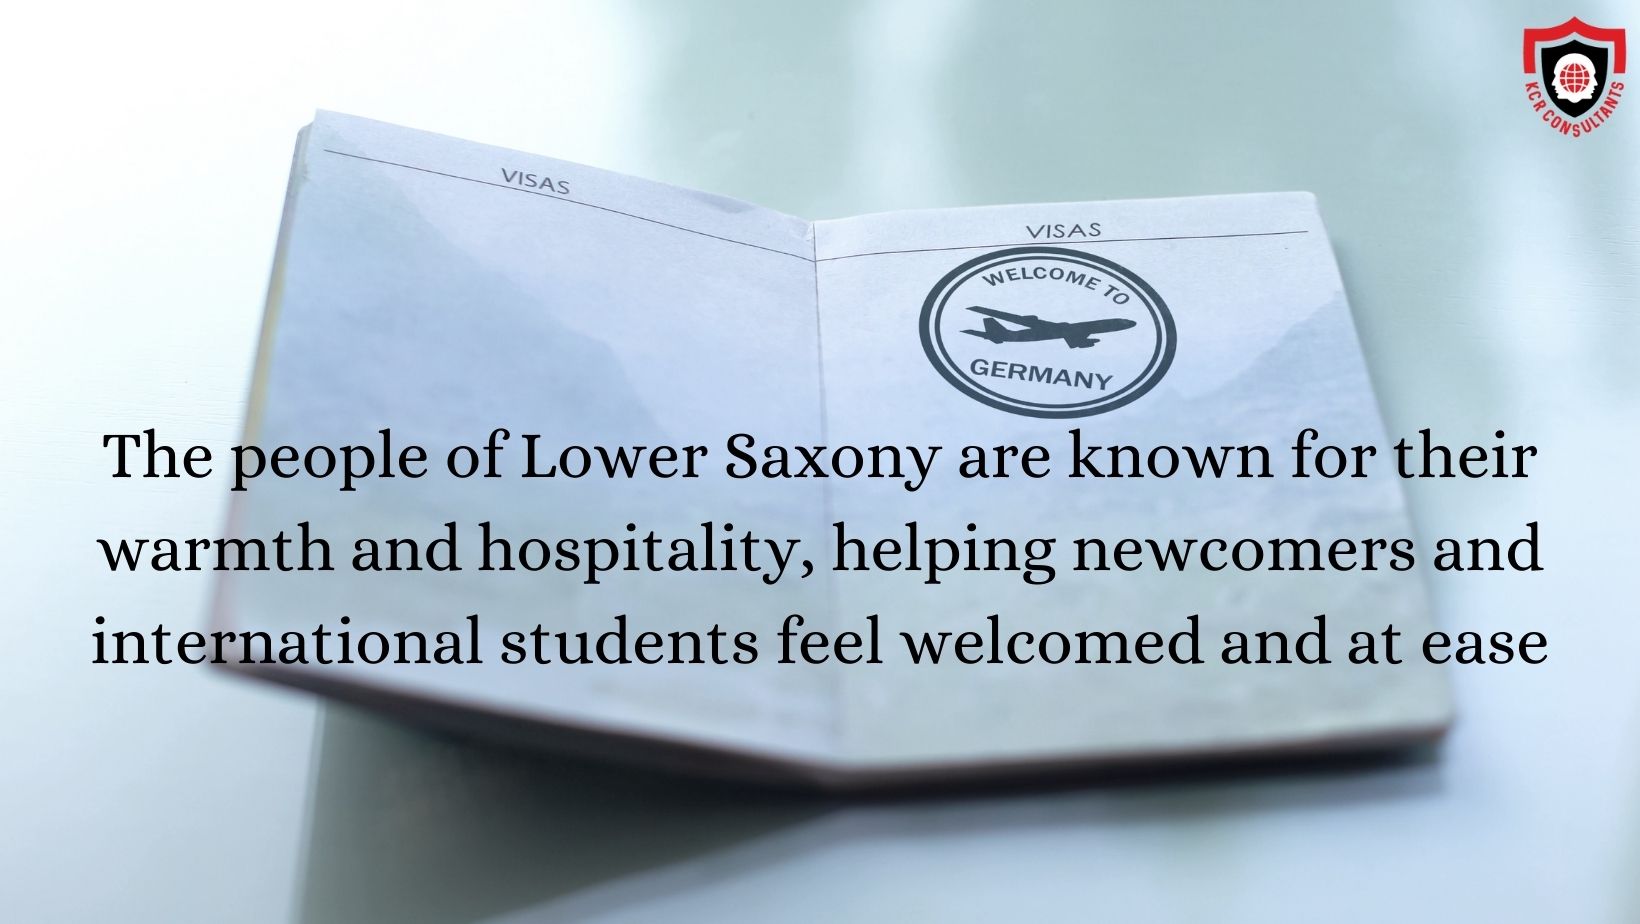 LOWER SAXONY - KCR CONSULTANTS - Study in Germany - Hospitality